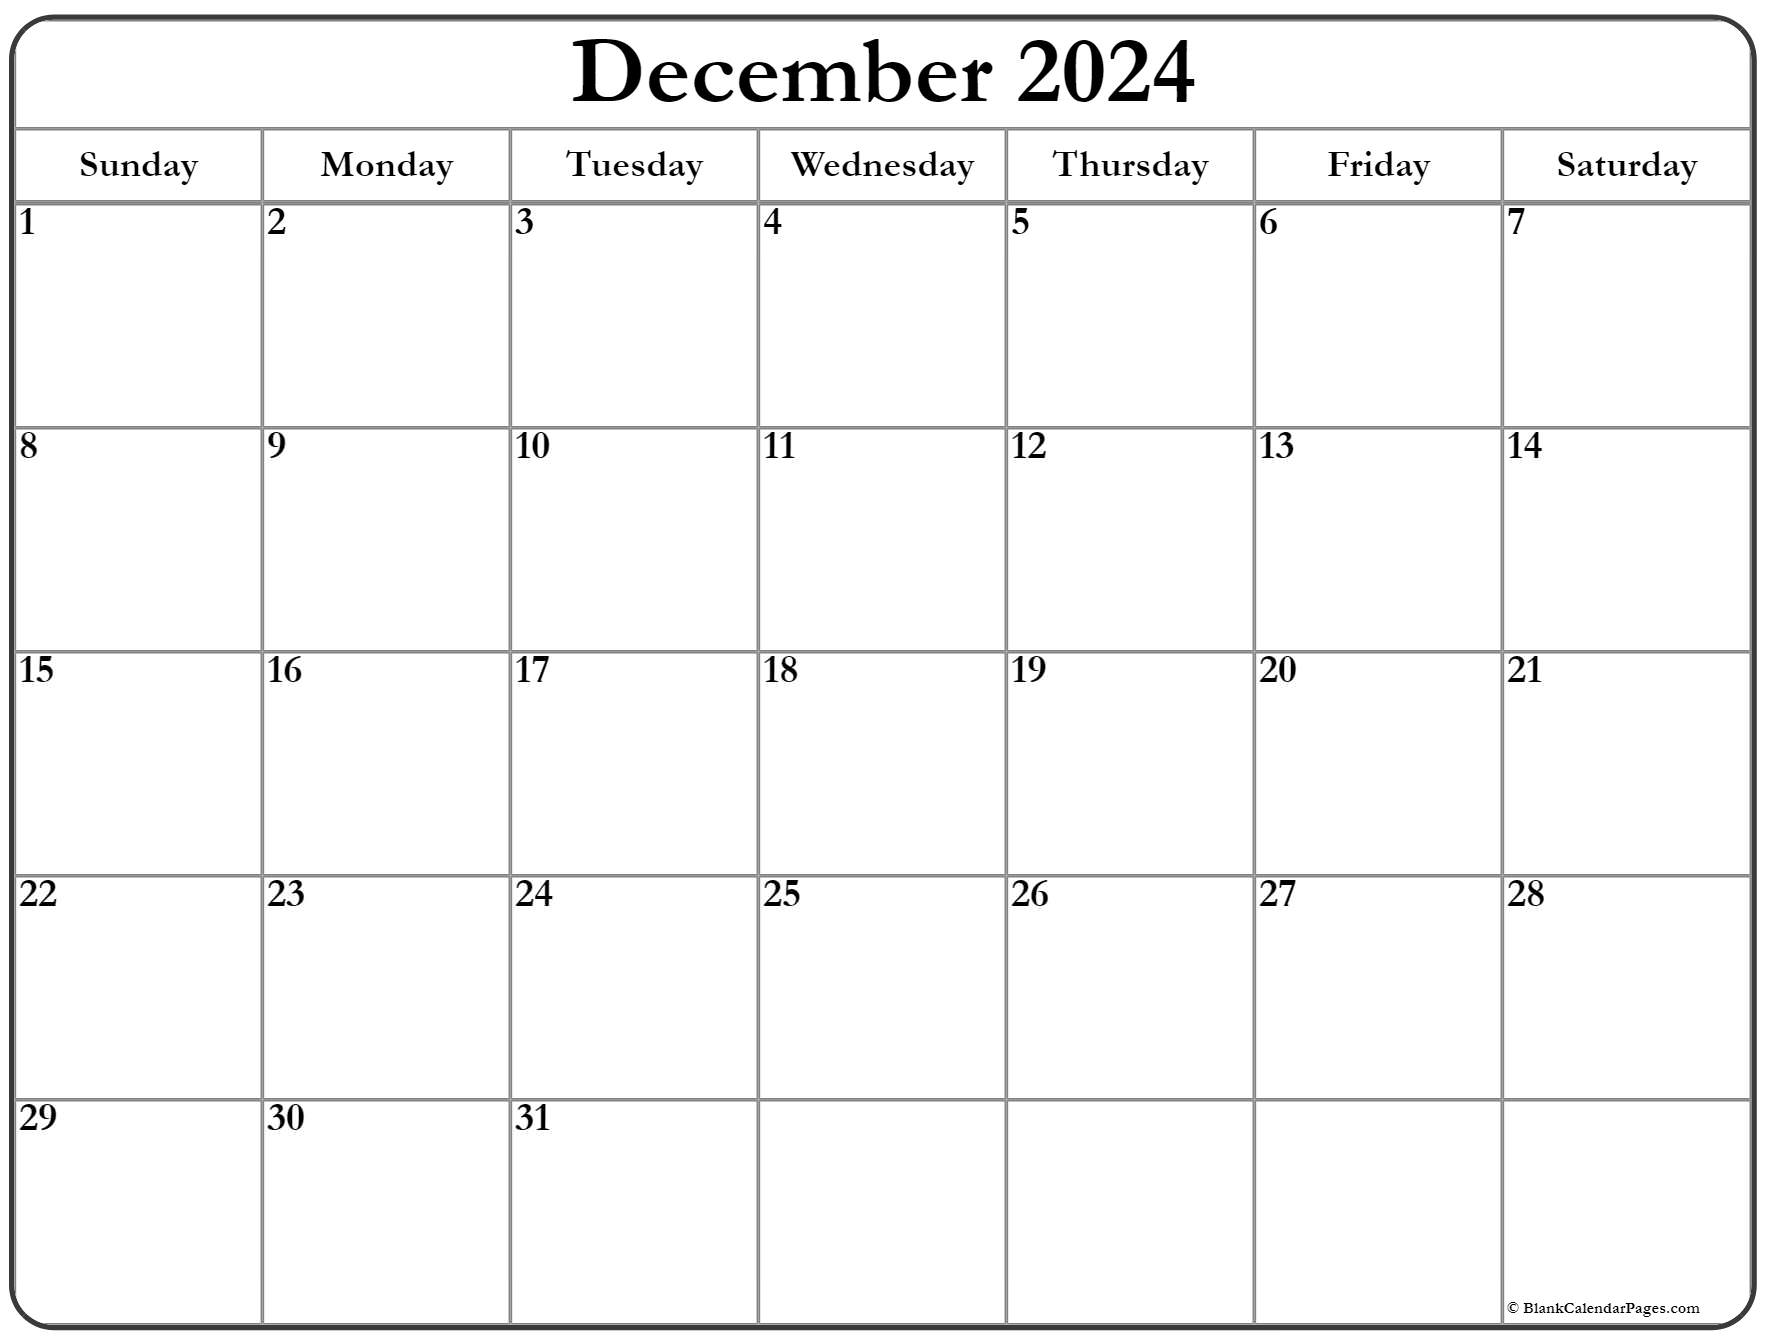 December 2022 calendar free printable calendar templates